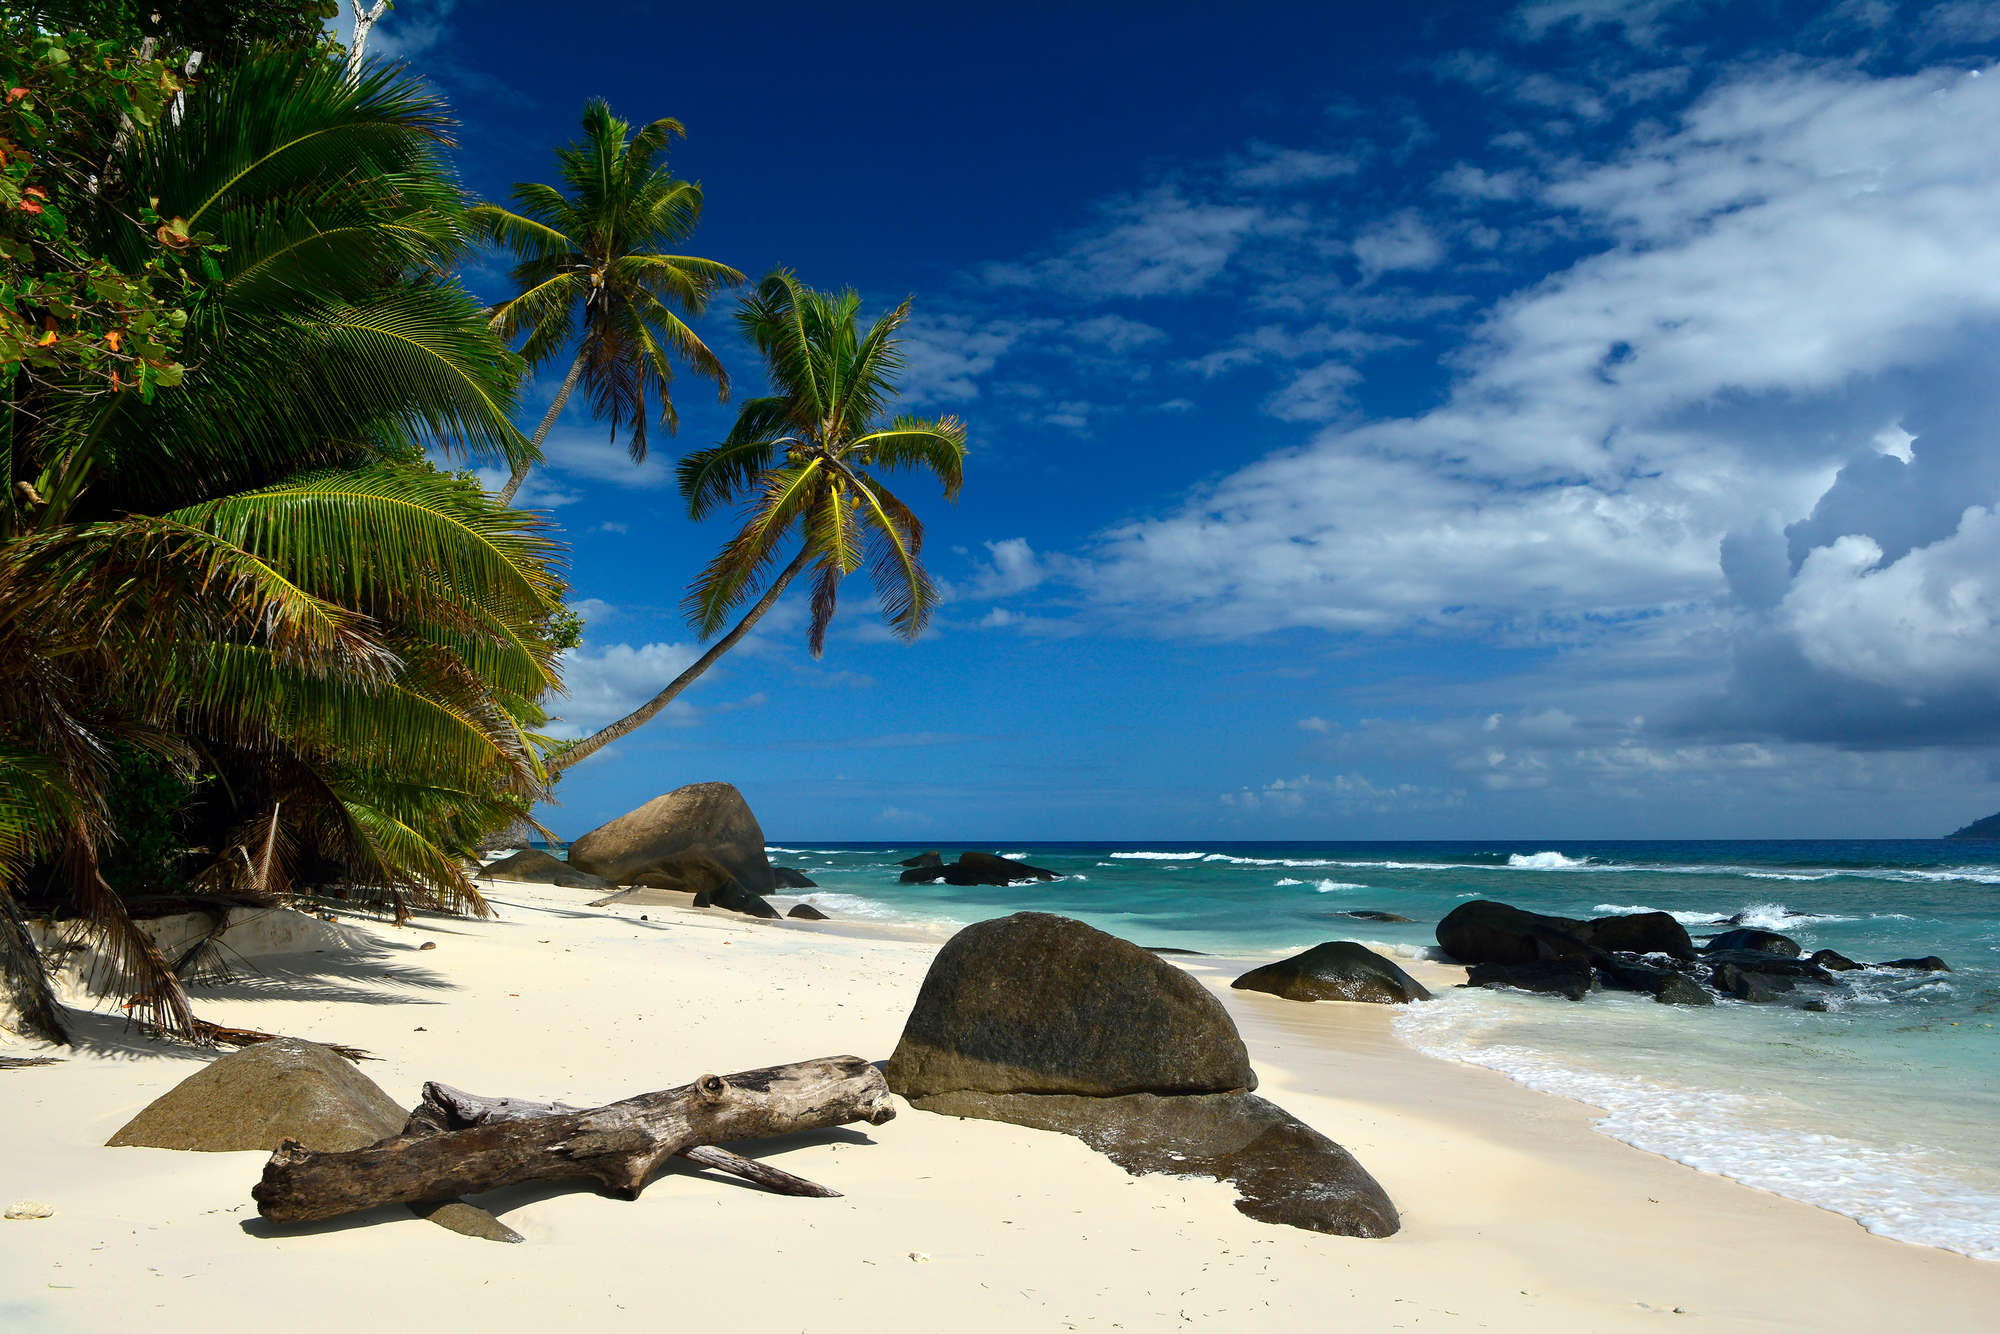             Carta da parati South Seas Seychelles Palm Trees & Beach su tessuto non tessuto opaco liscio
        